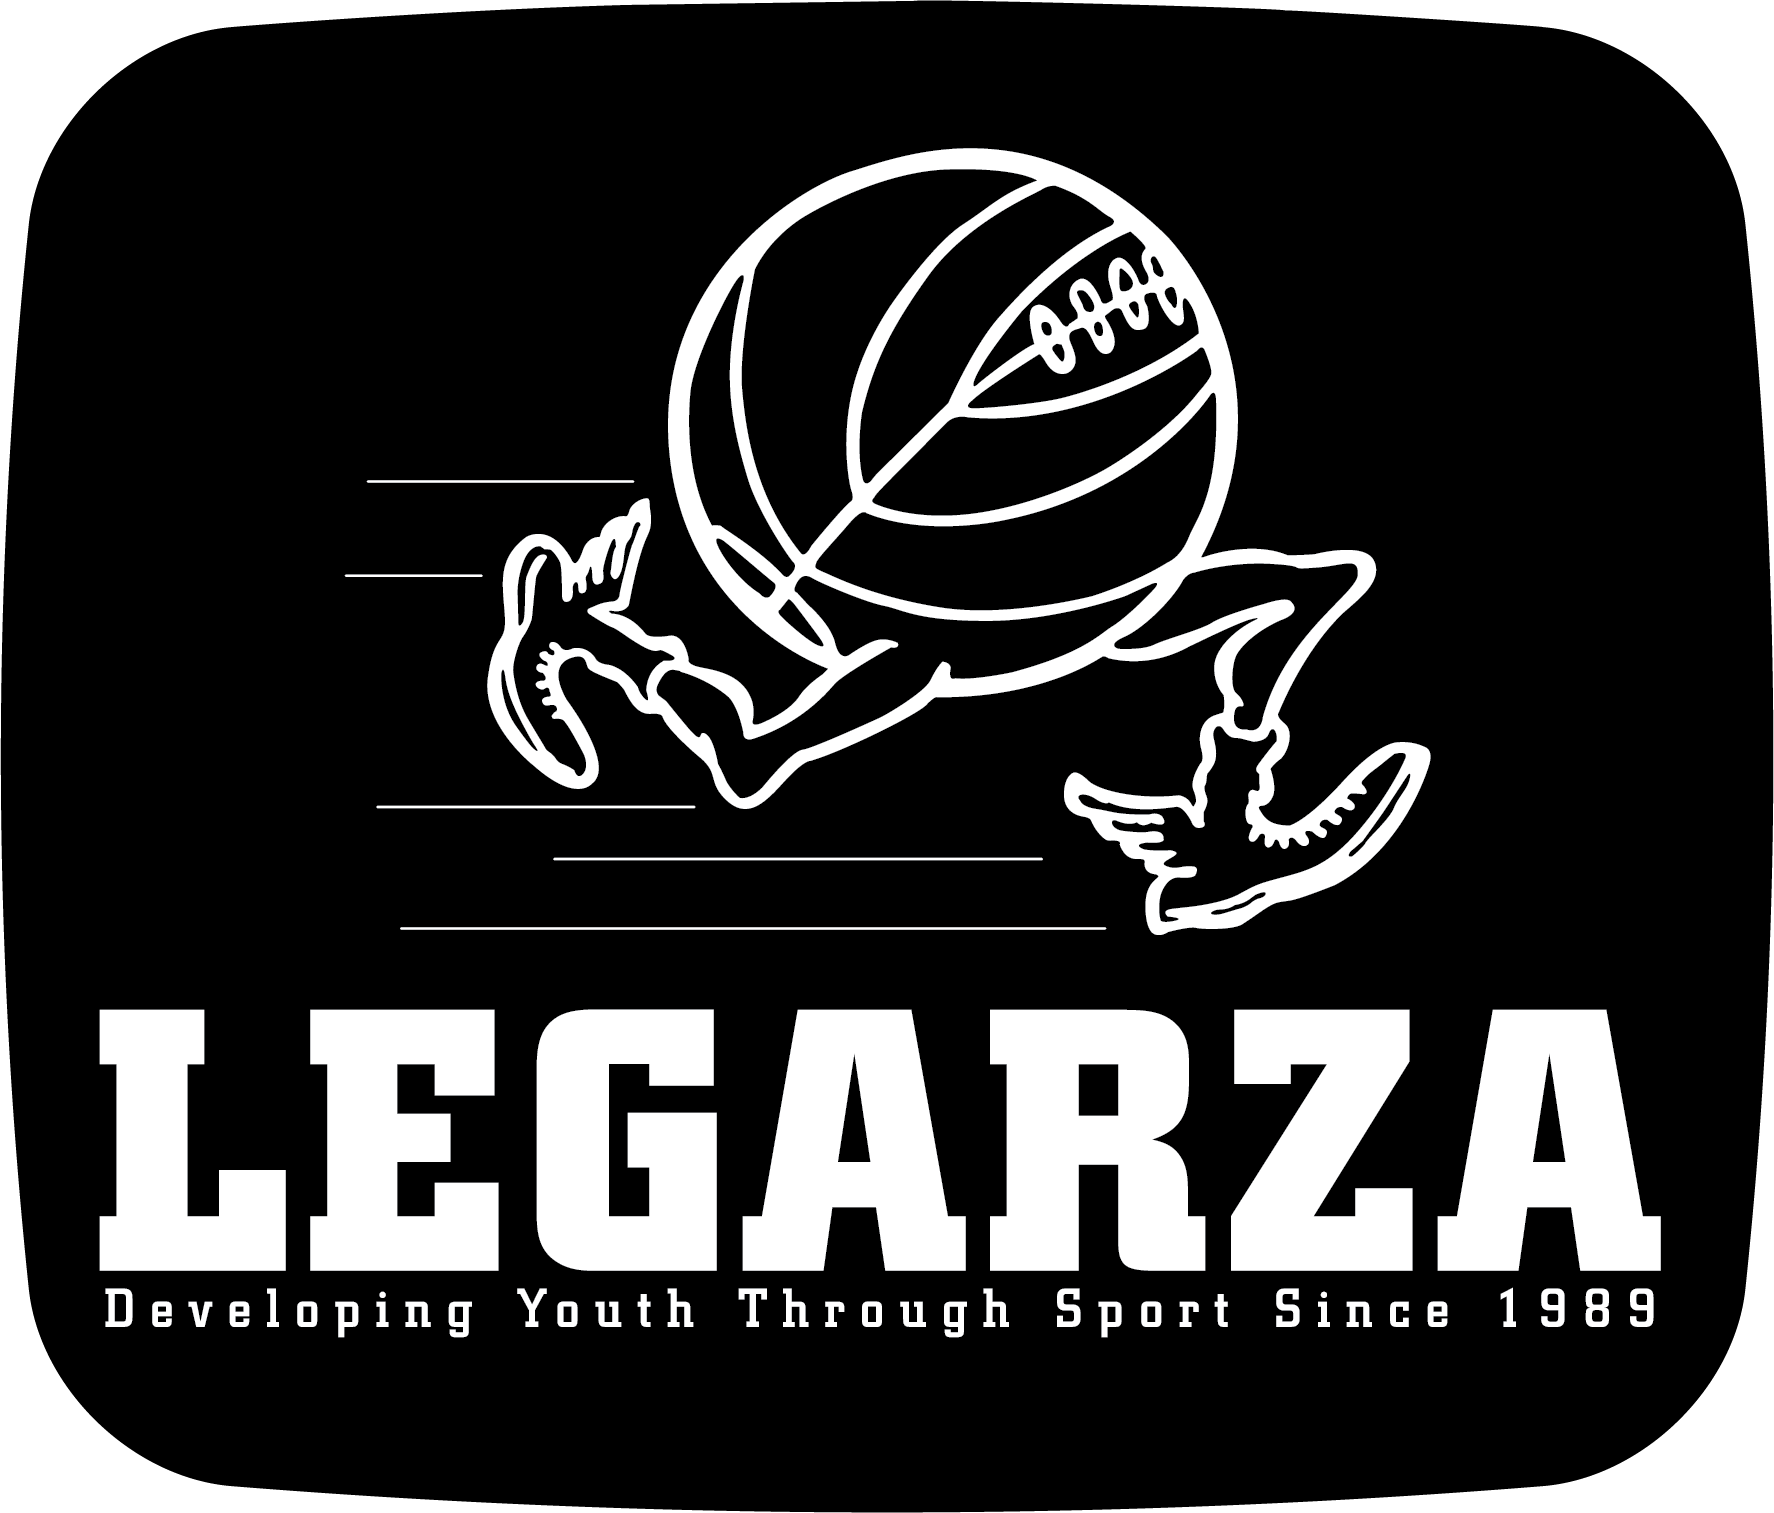 Legarza Sports